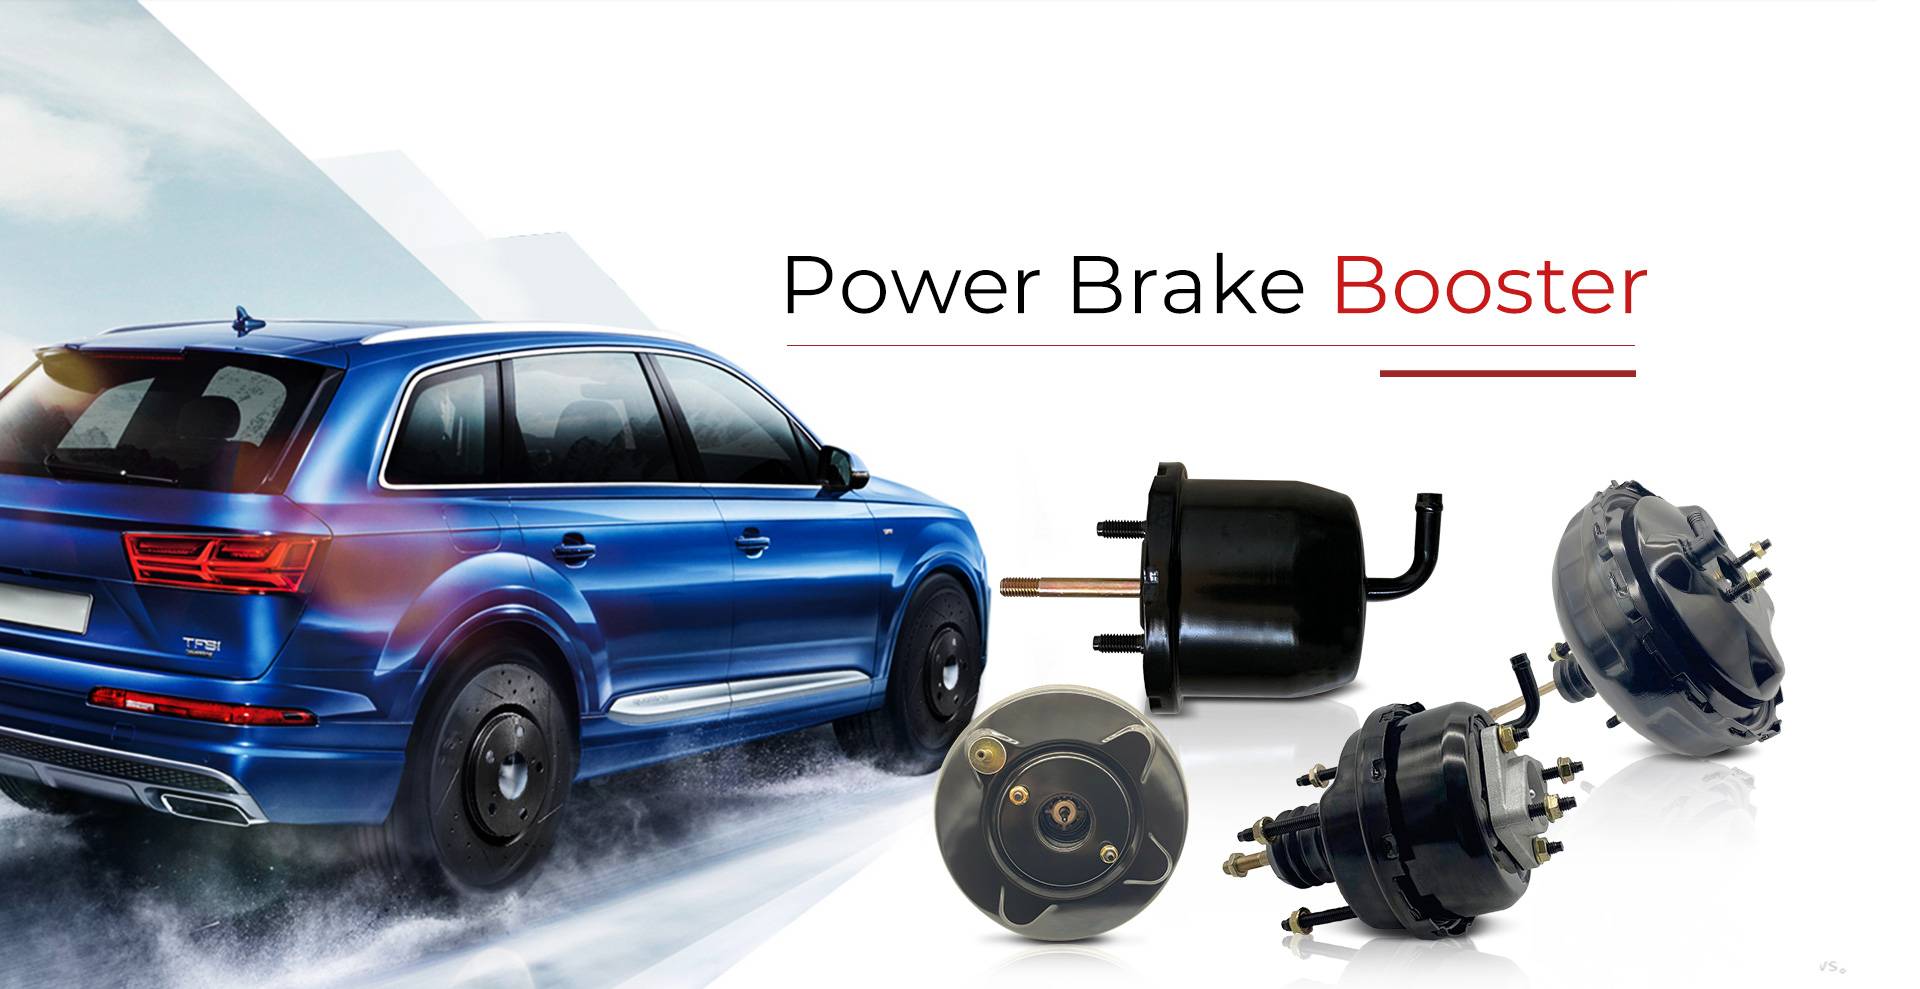 Power Brake Booster